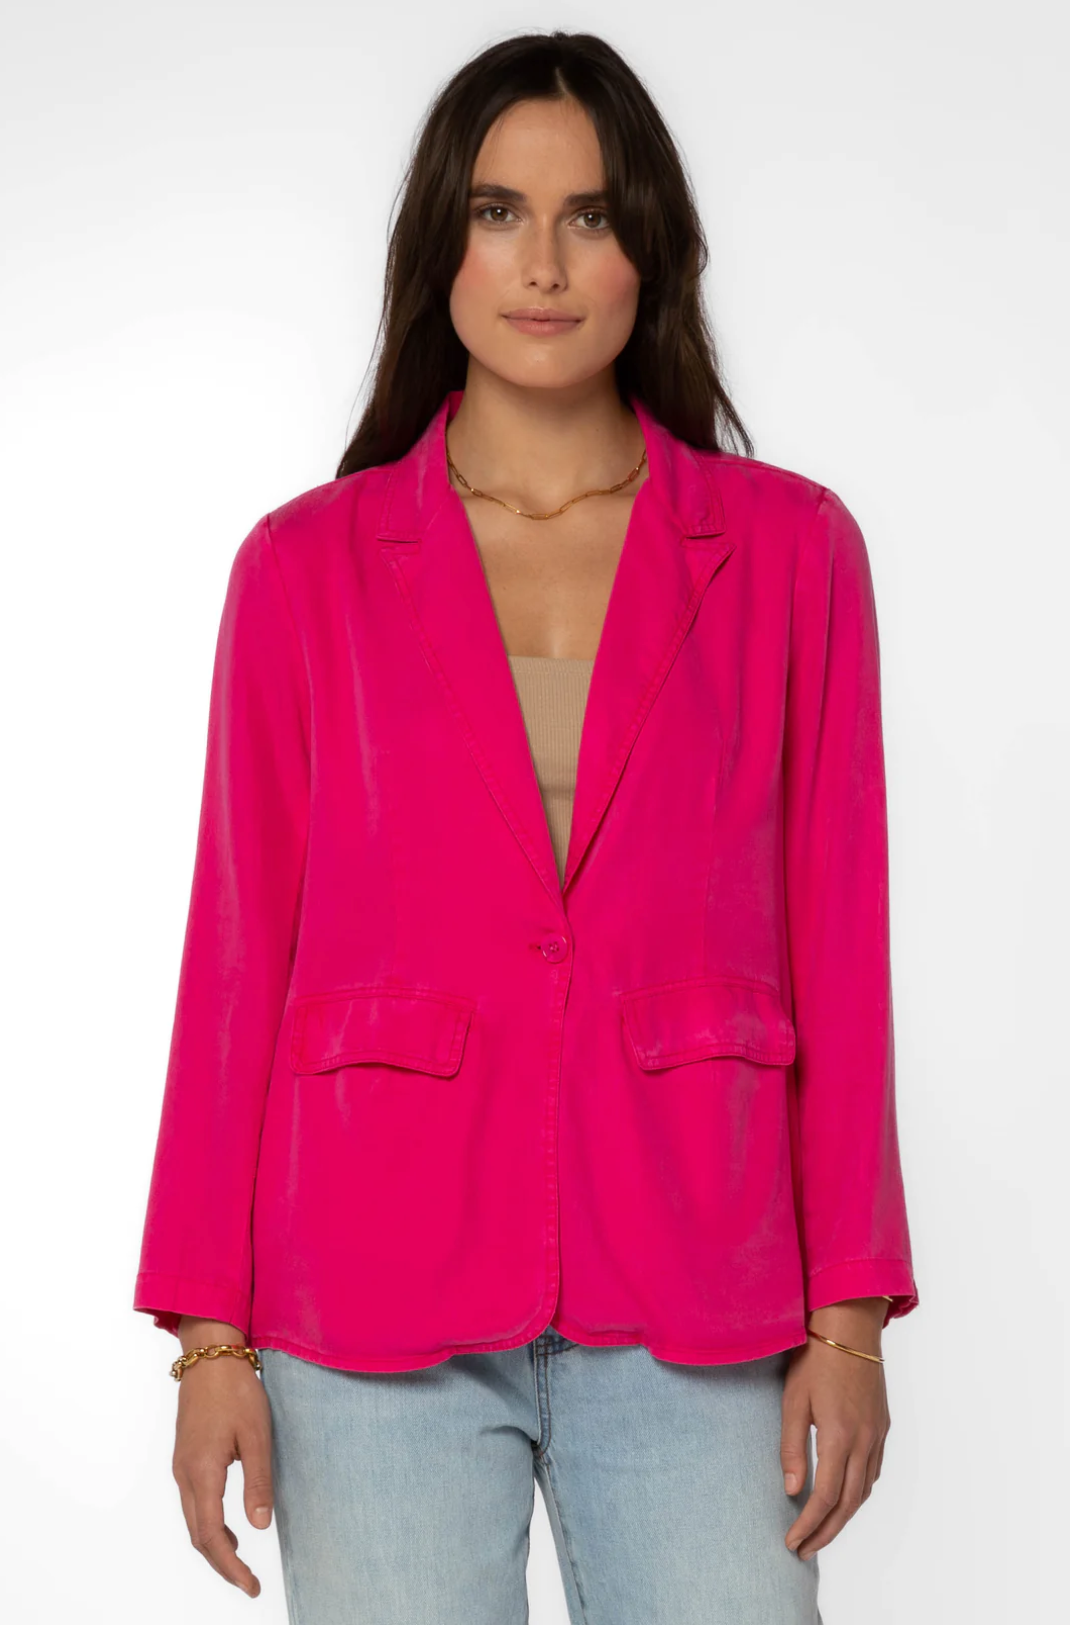 patty tencel blazer in pink, front view